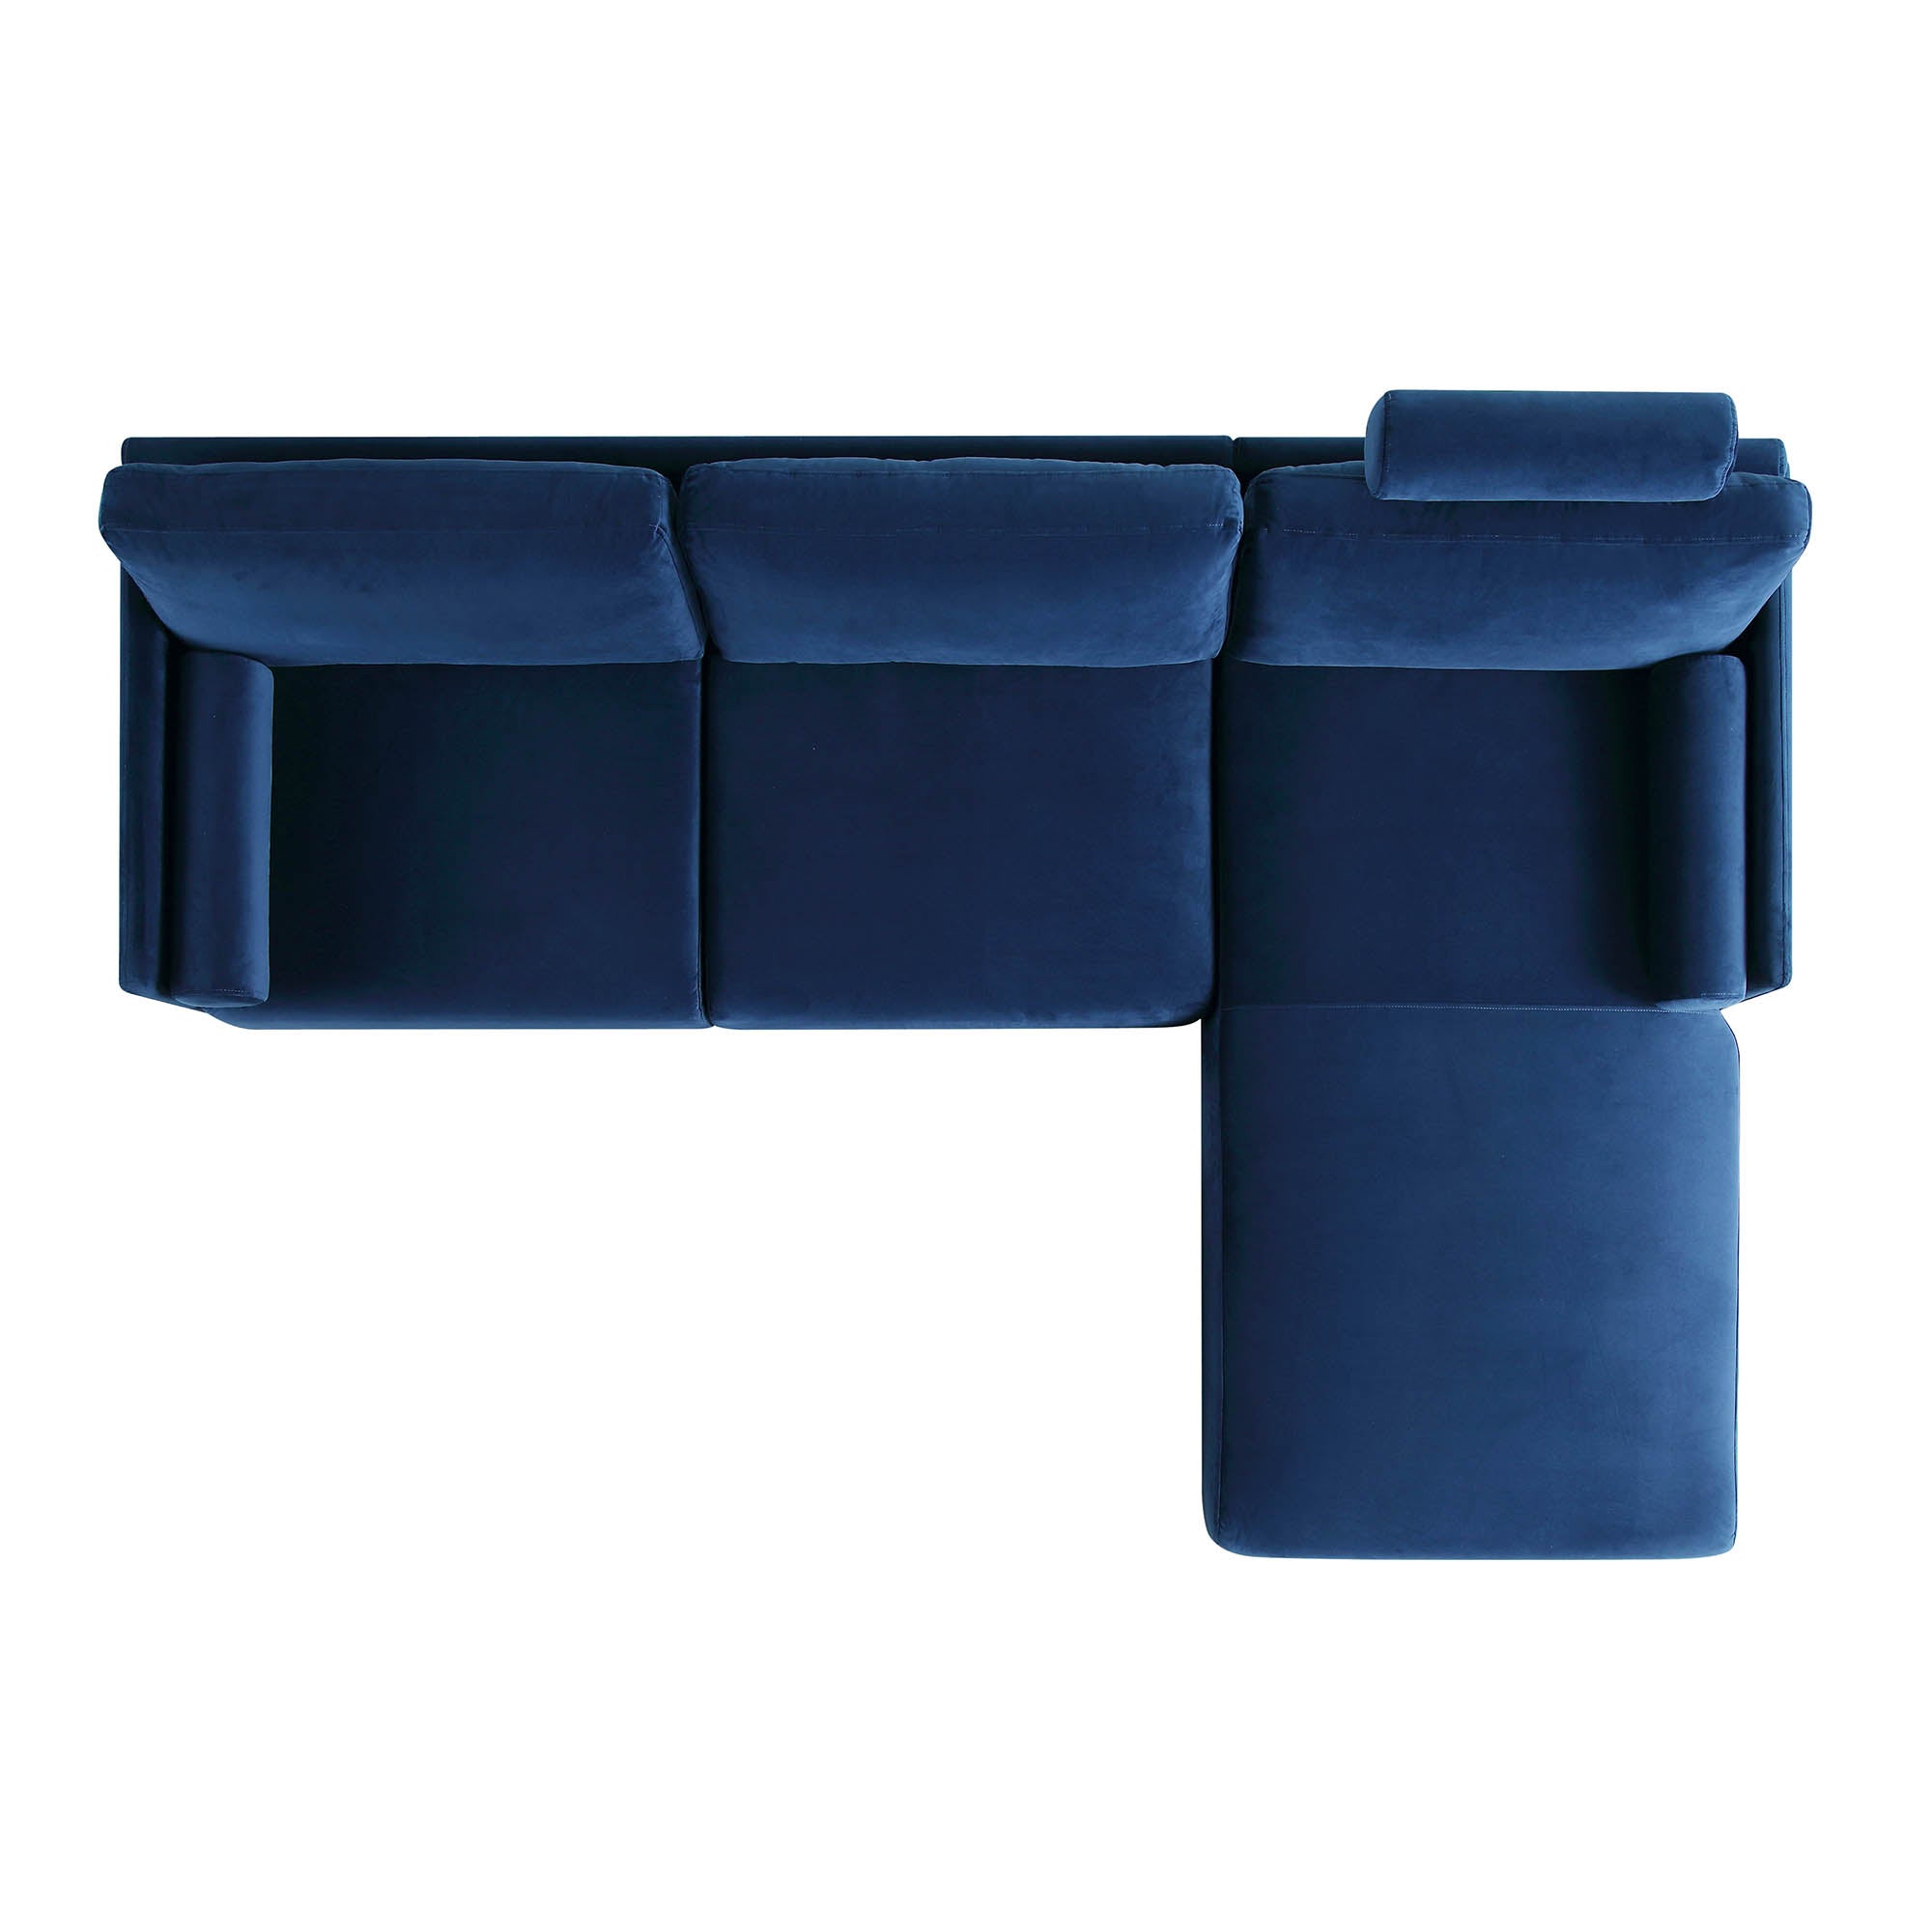 Timber Navy Blue Velvet Sofa, Large 3-Seater Chaise Sofa Right Hand